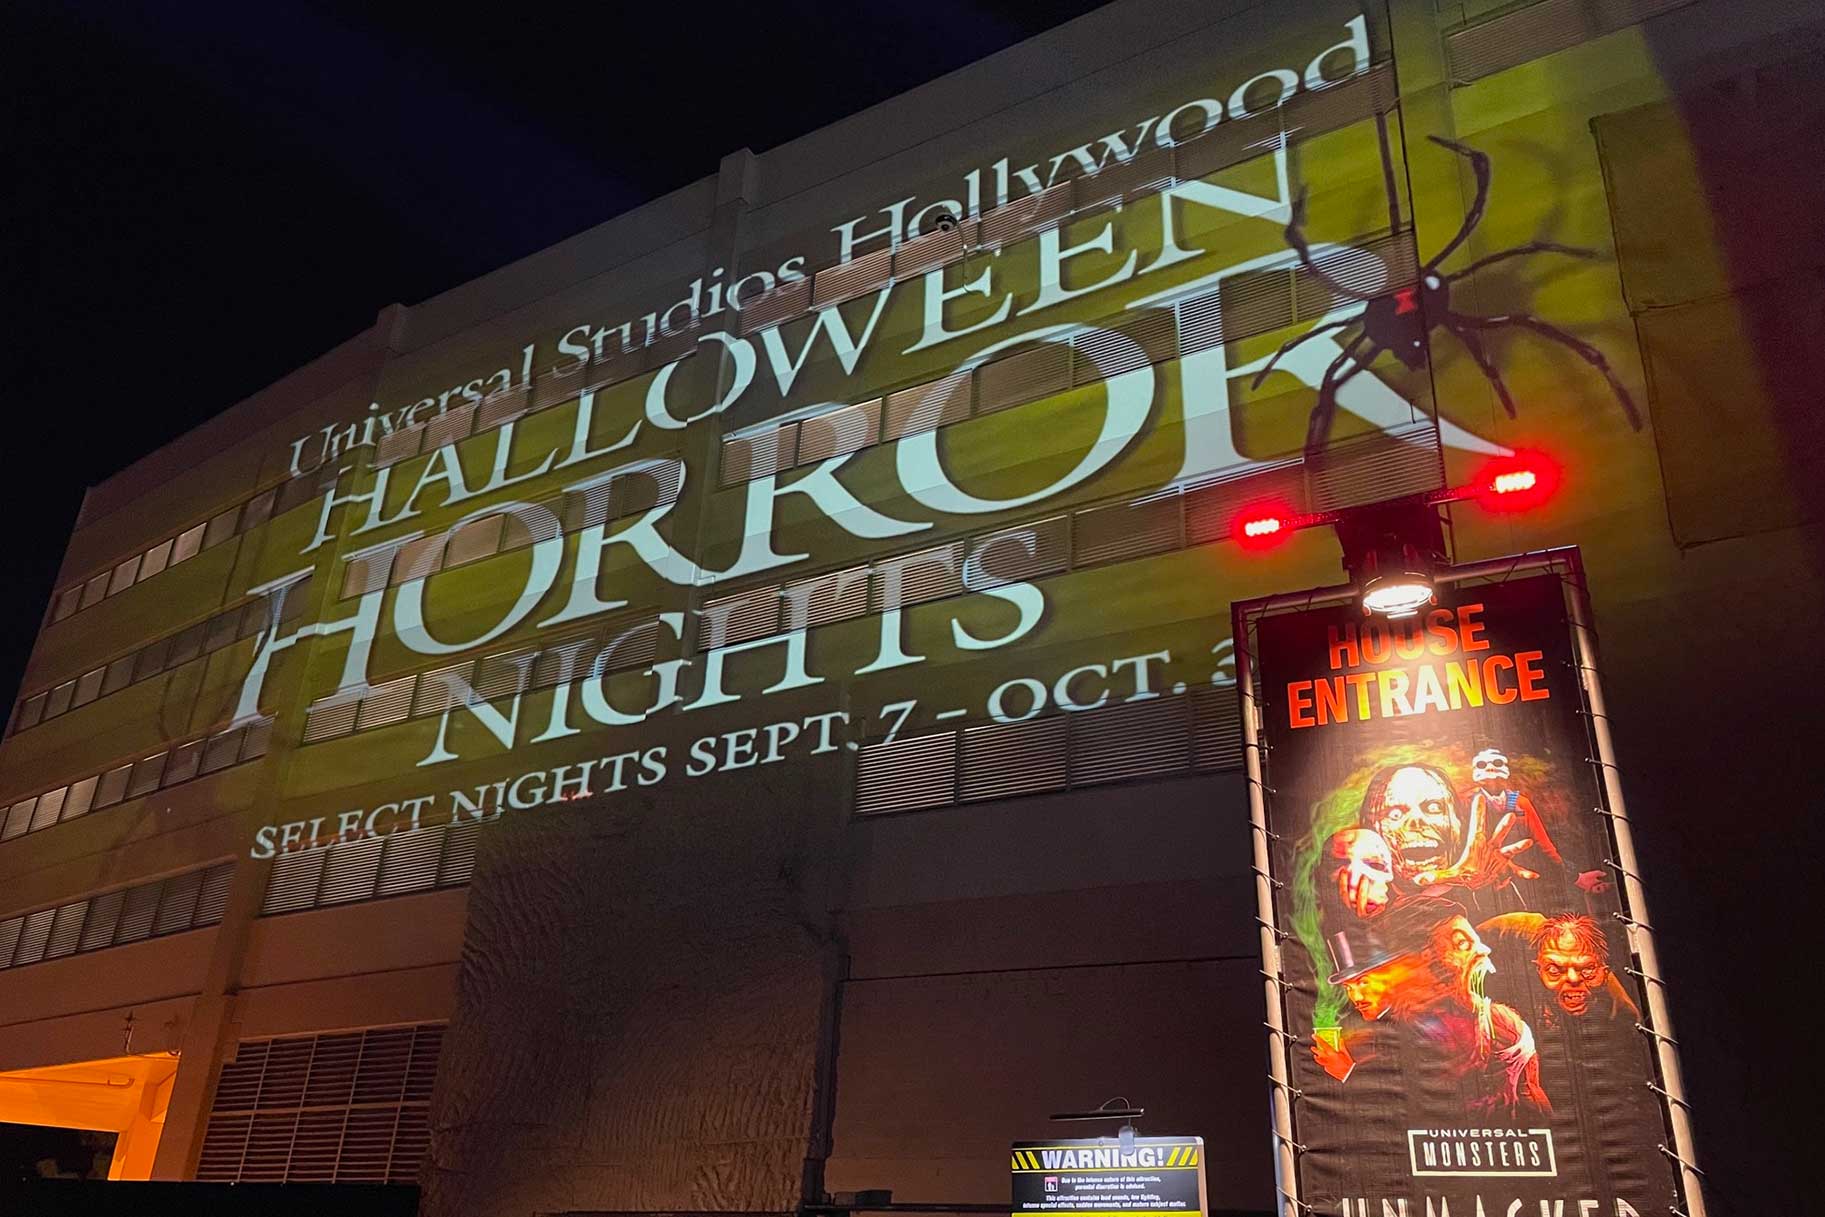 Stranger Things, more Halloween Horror Nights 2023 merchandise arrives to  Universal Parks